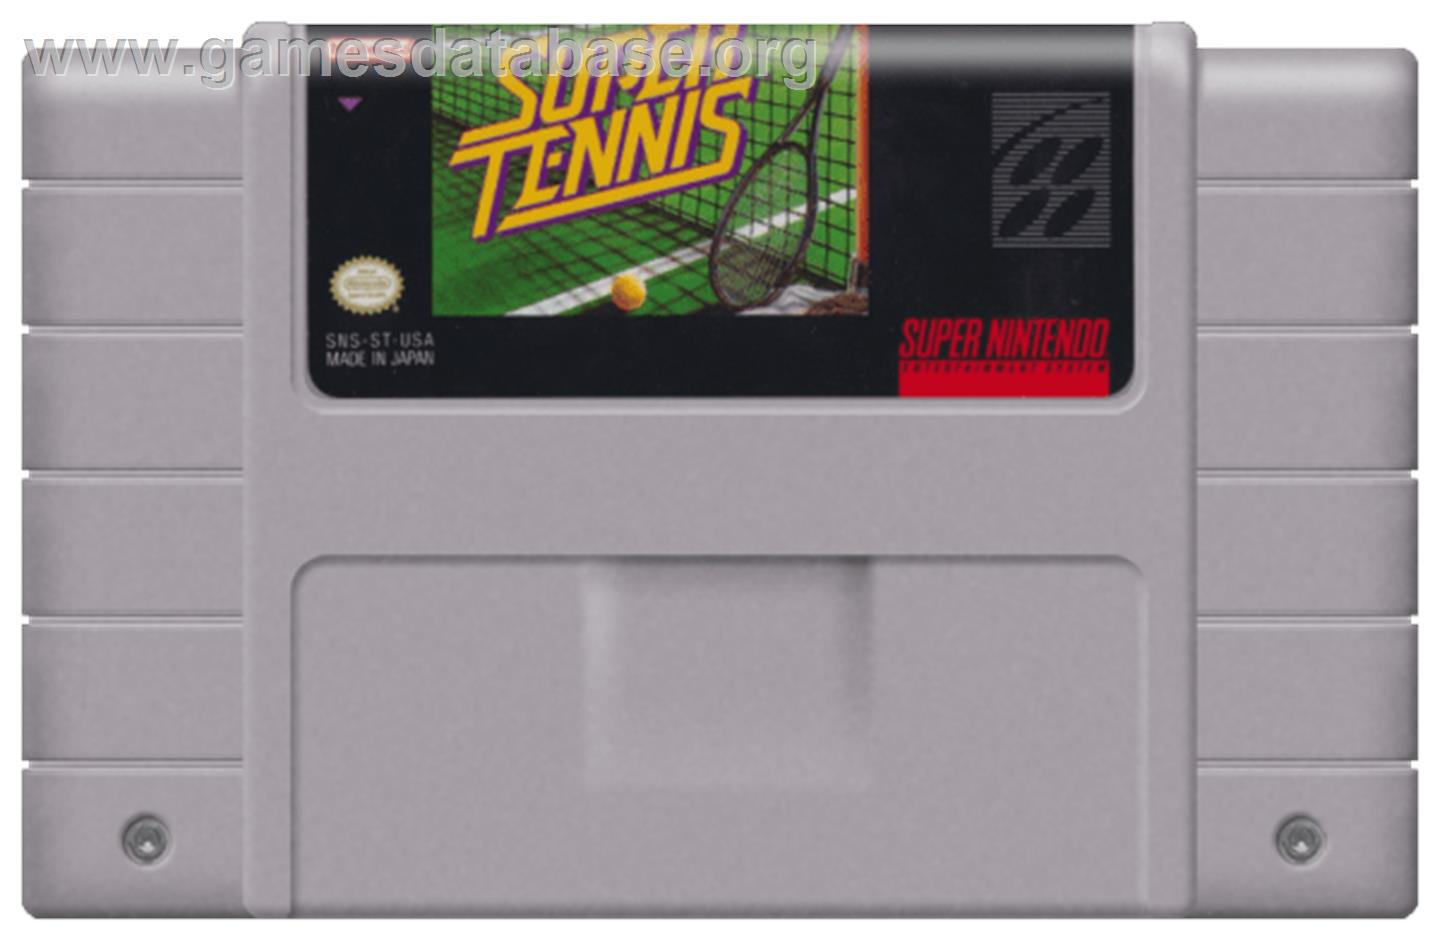 Super Tennis - Nintendo SNES - Artwork - Cartridge